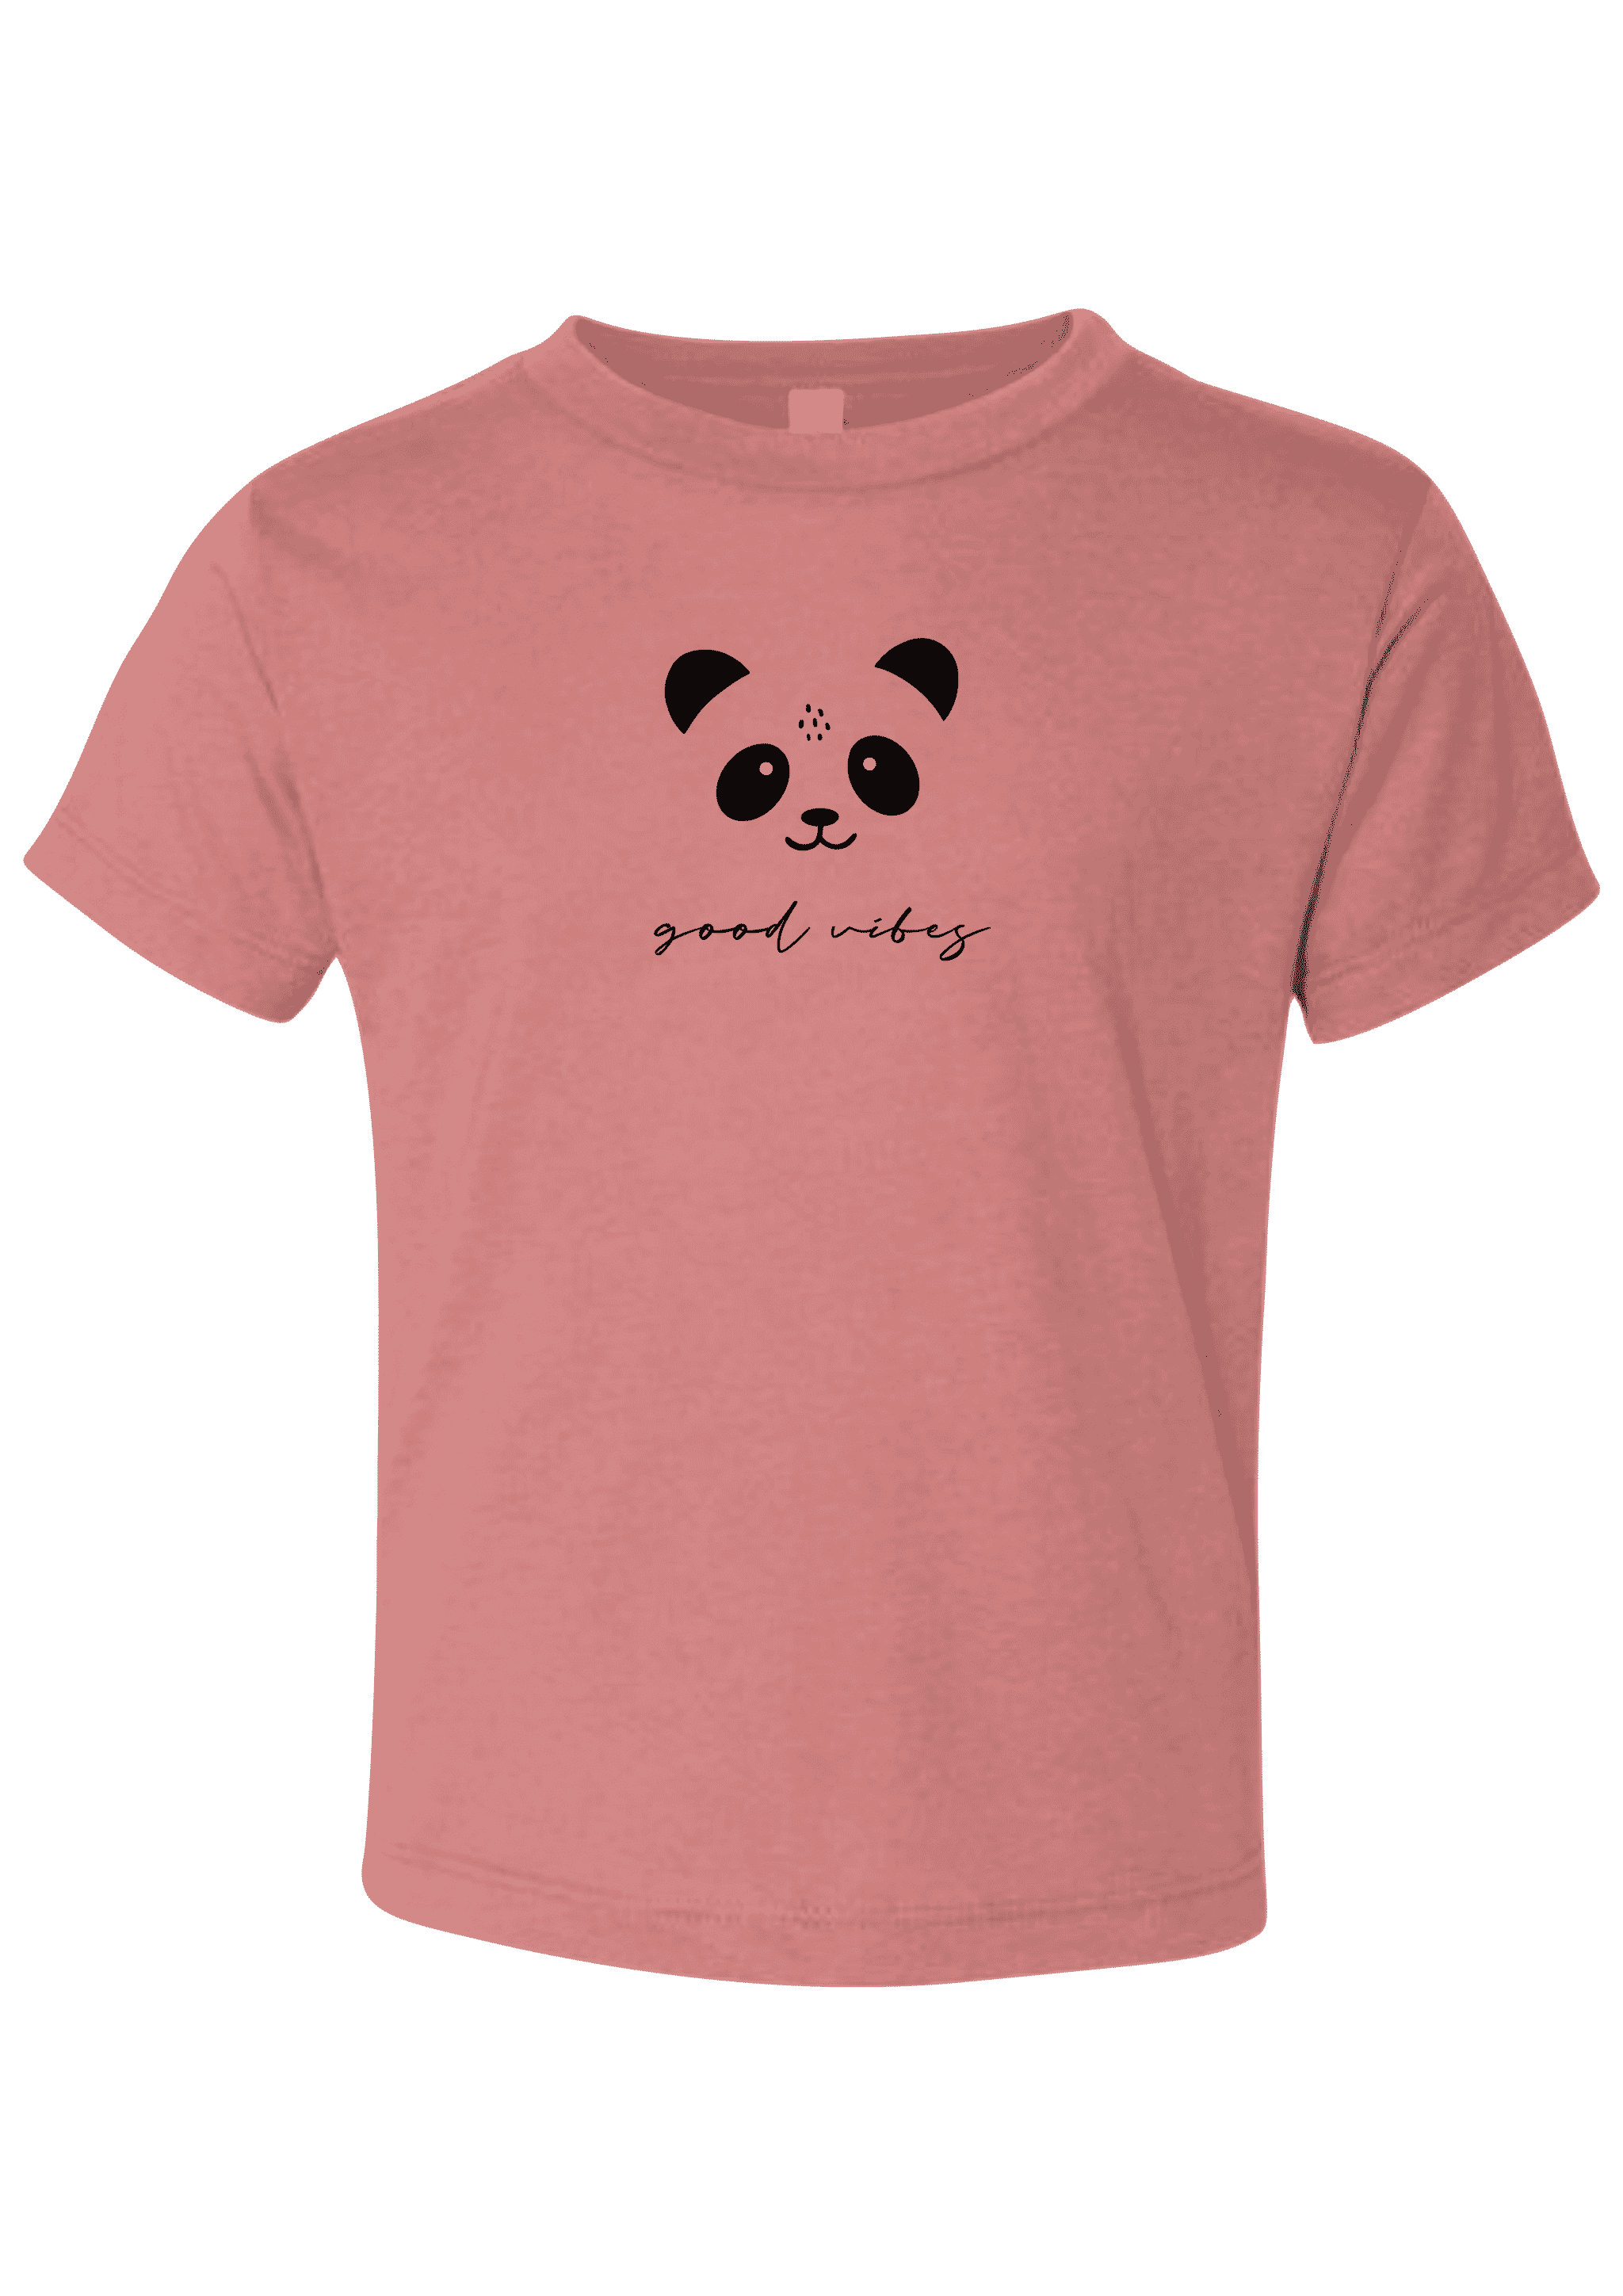 Panda T-Shirt Kleinkind